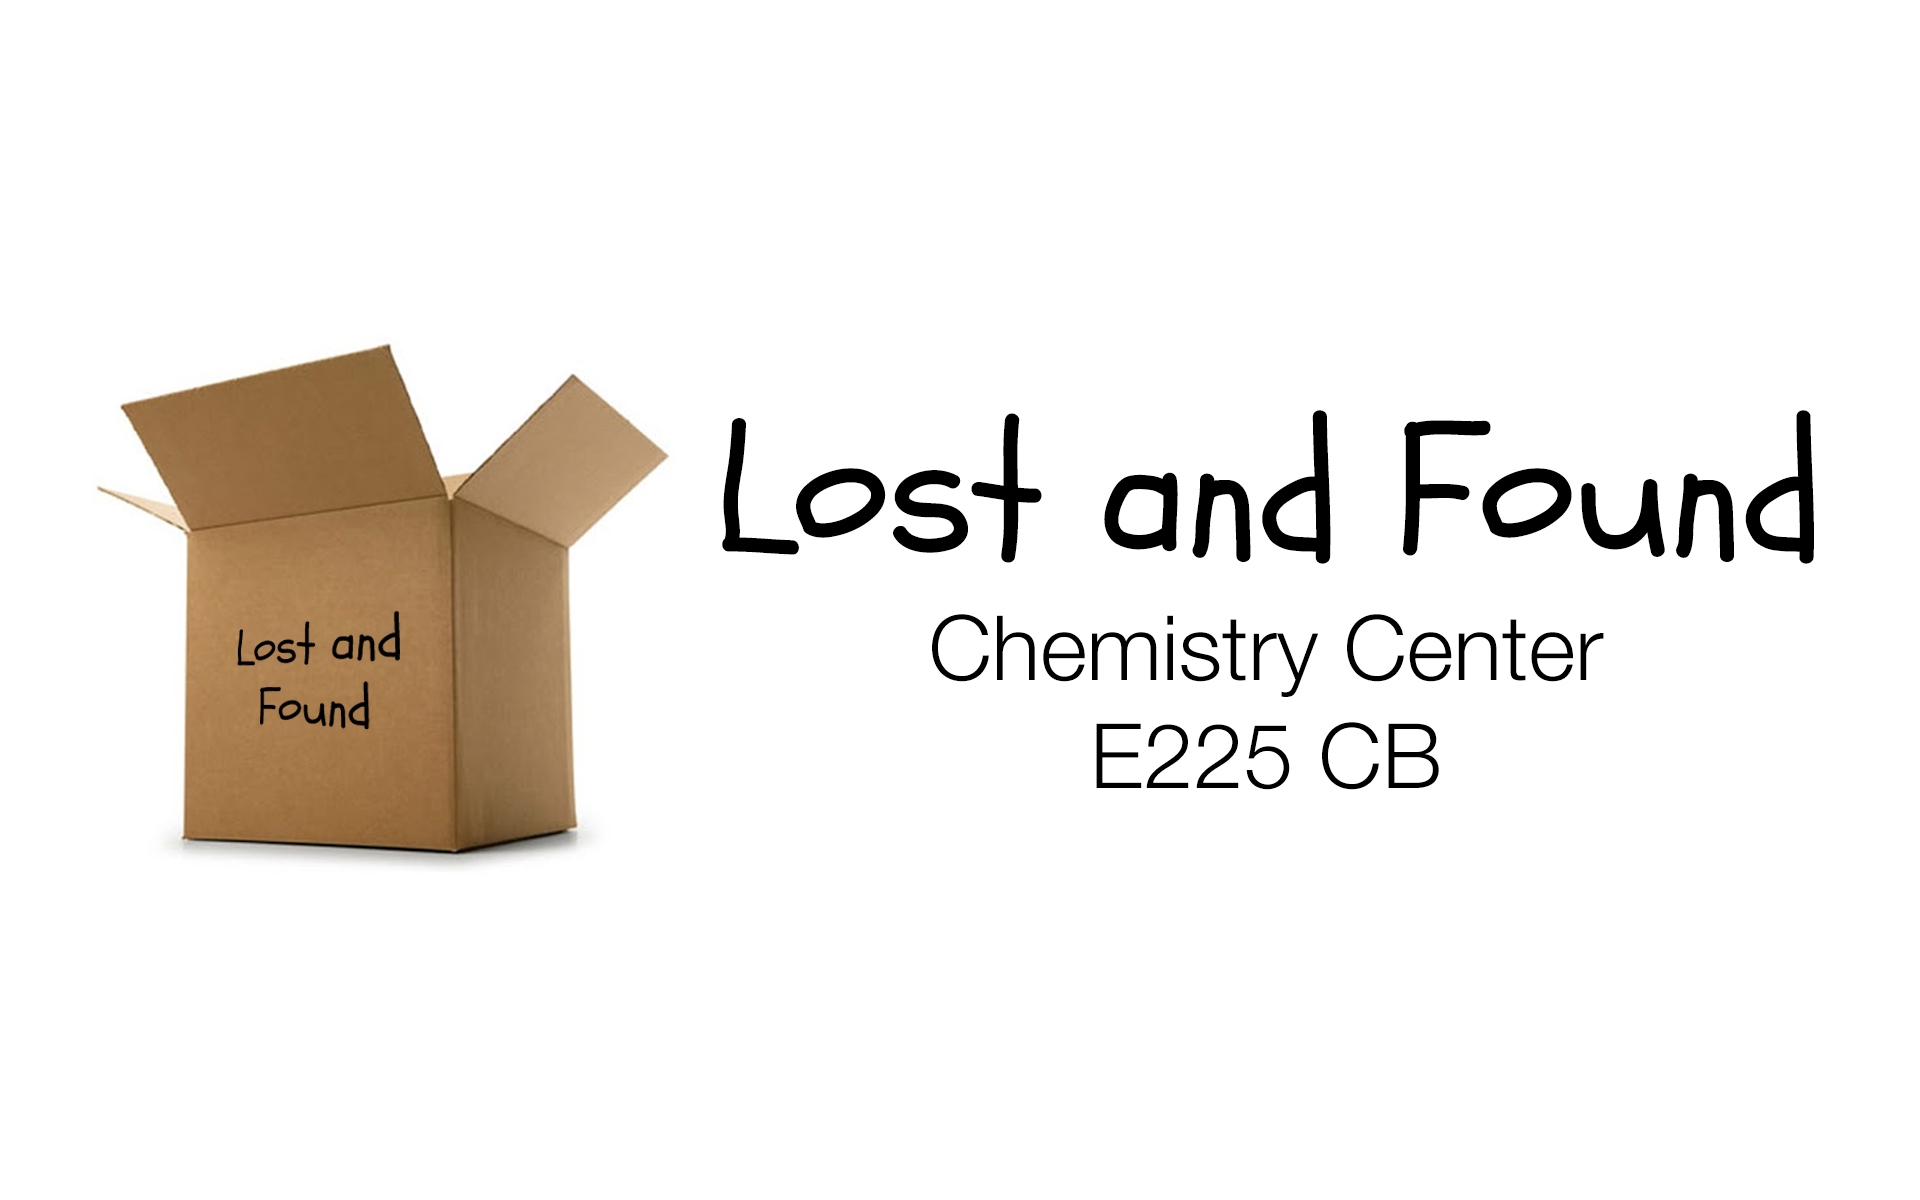 Lost and Found, located in the Chemistry Center, E225 CB